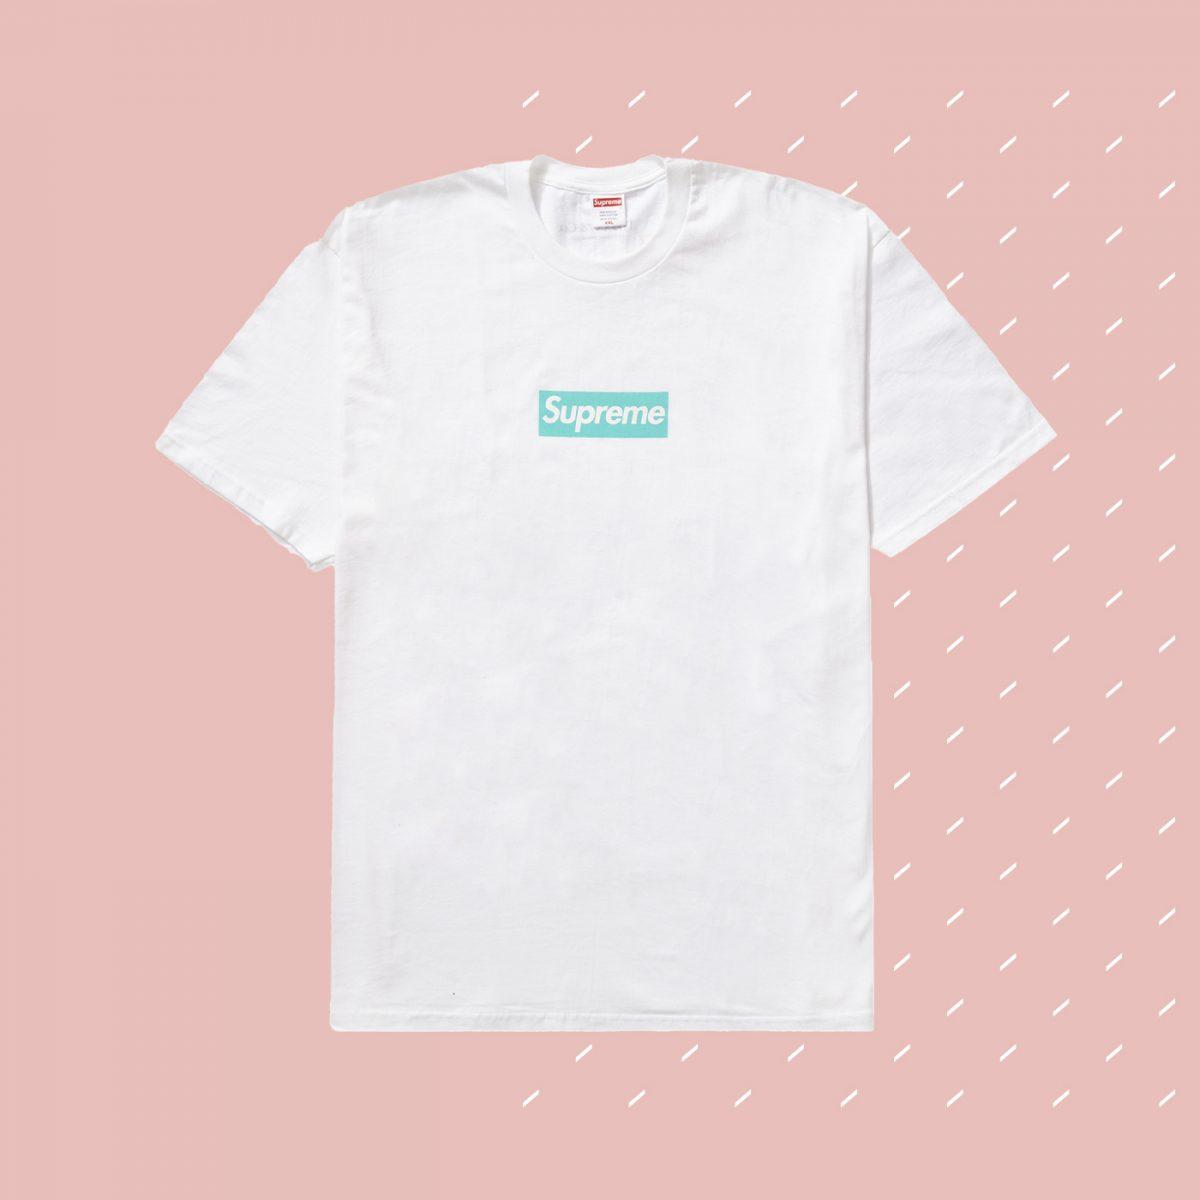 Supreme x Tiffany & Co. Box Logo T-Shirt: Supreme Pick of the Week 